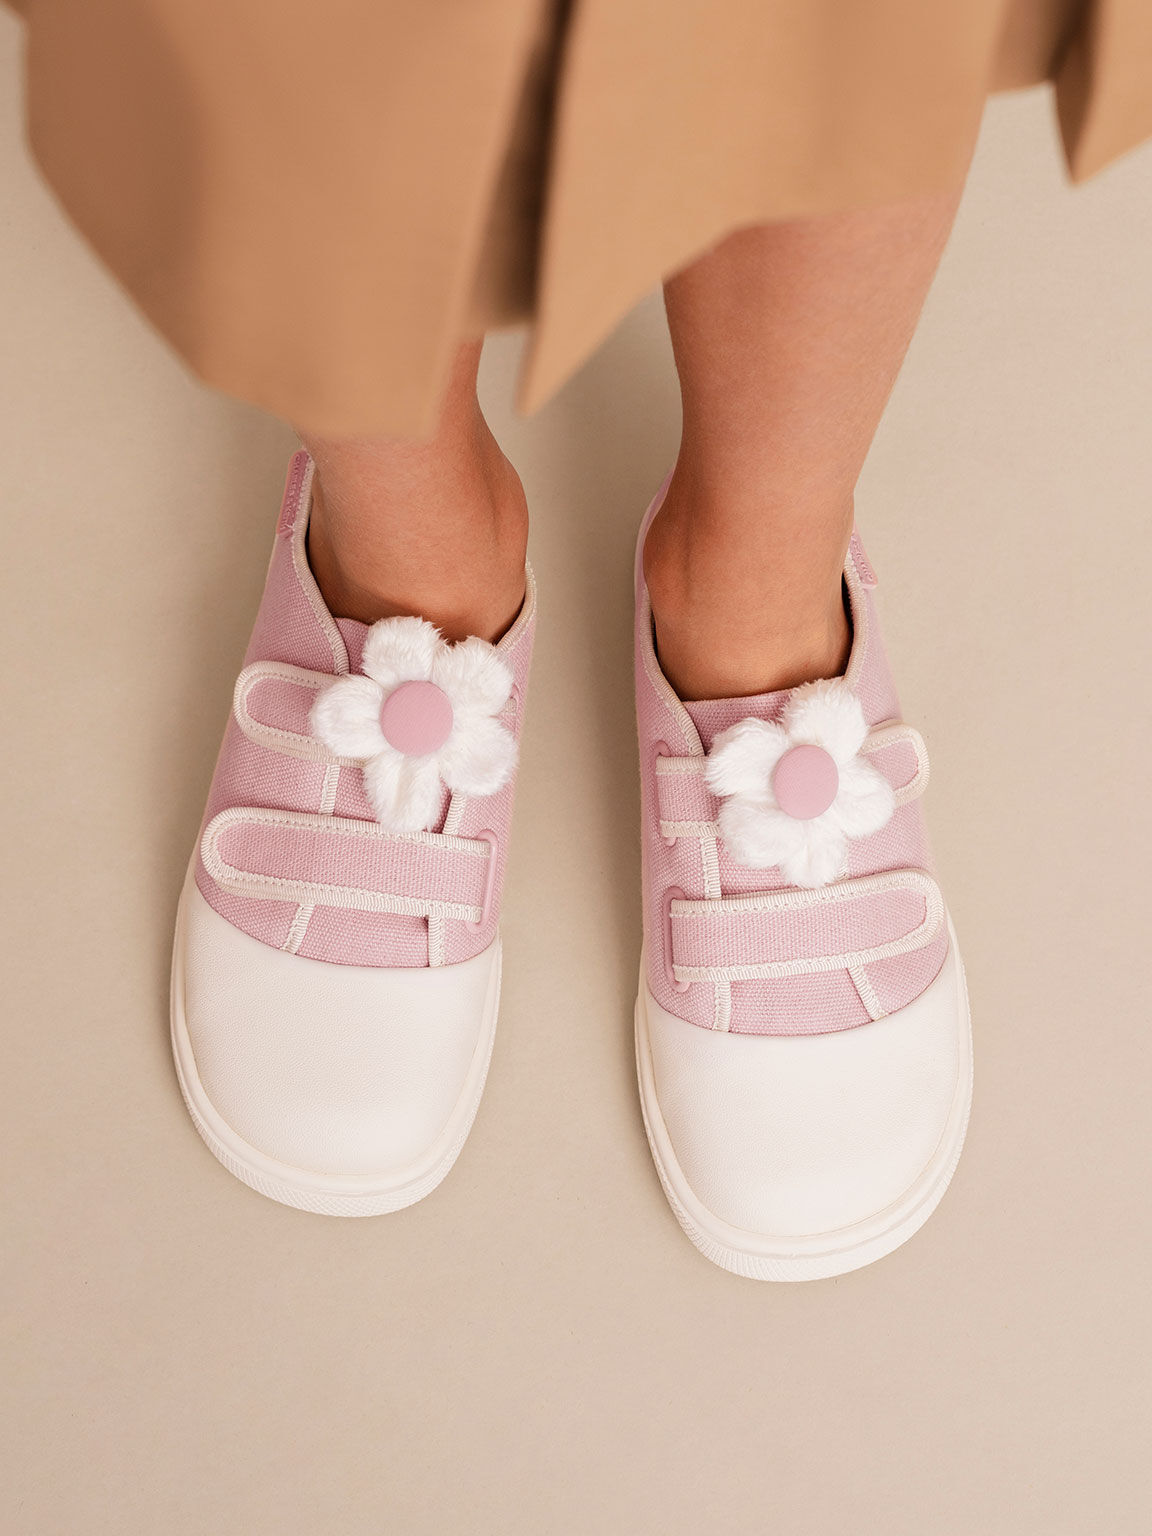 Sepatu Sneakers Girls' Flower-Embellished Canvas, Light Pink, hi-res